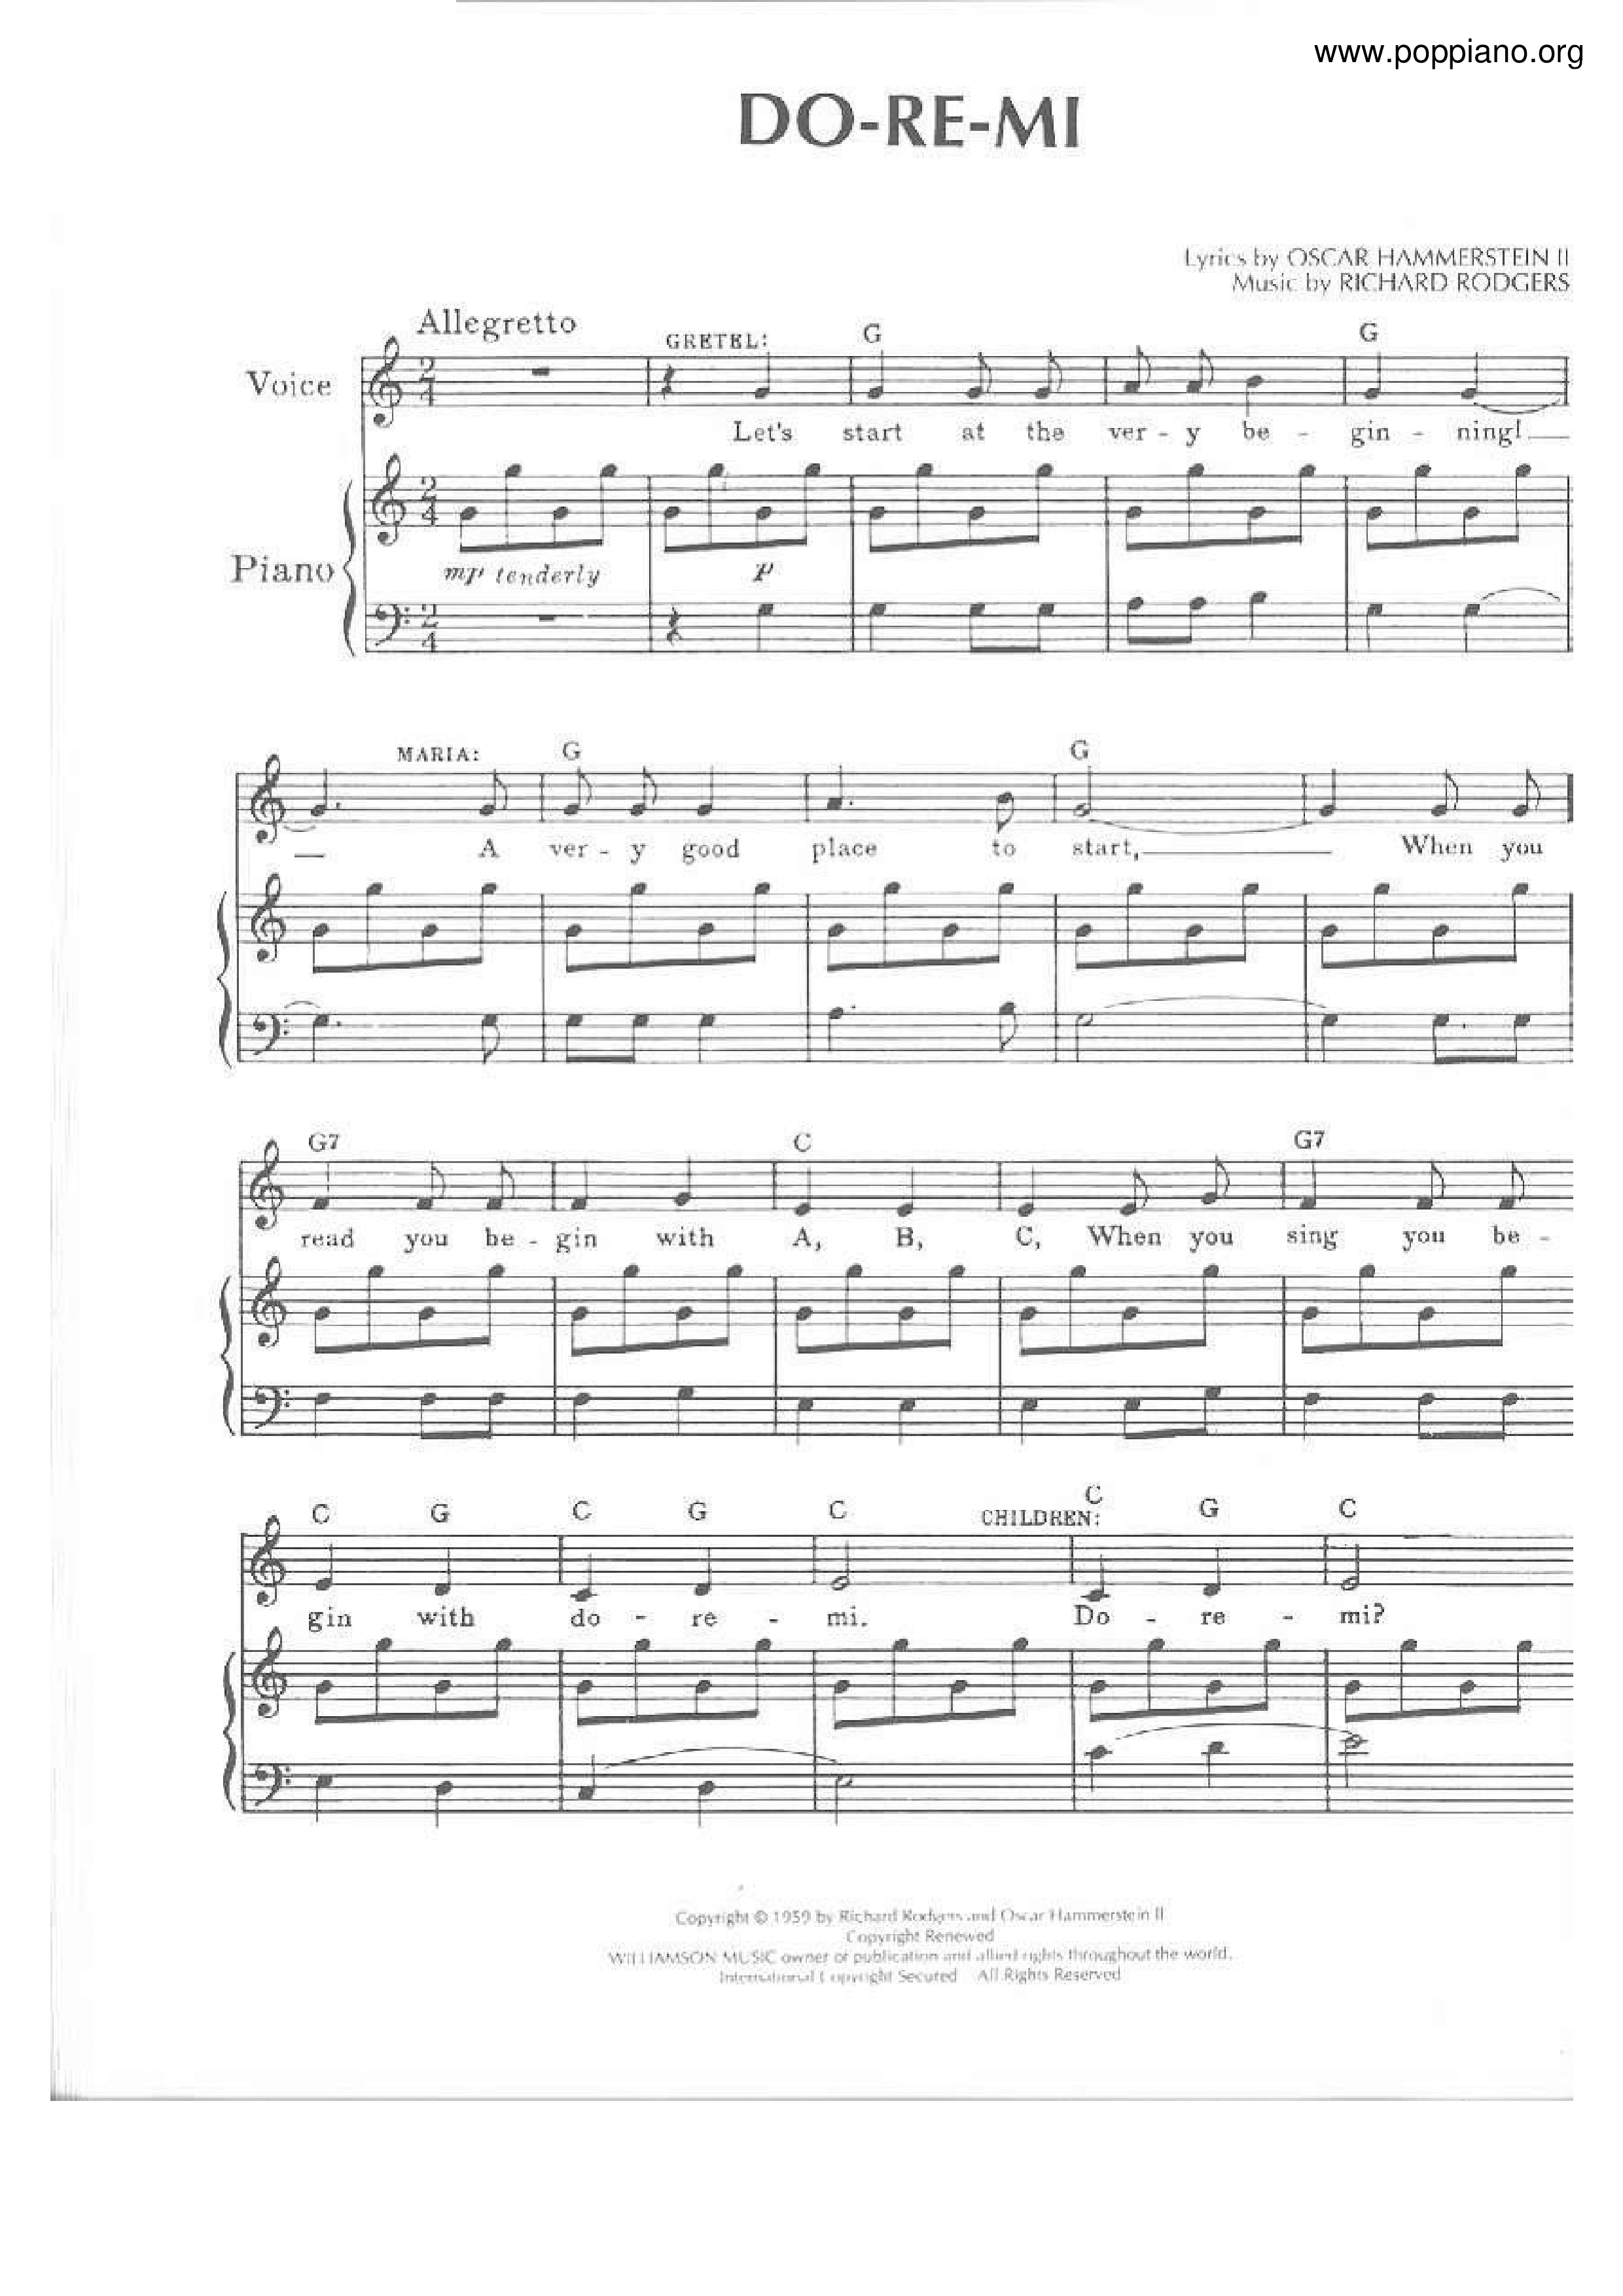 Movie songThe Sound Of Music DoReMi Sheet Music pdf, Free Score